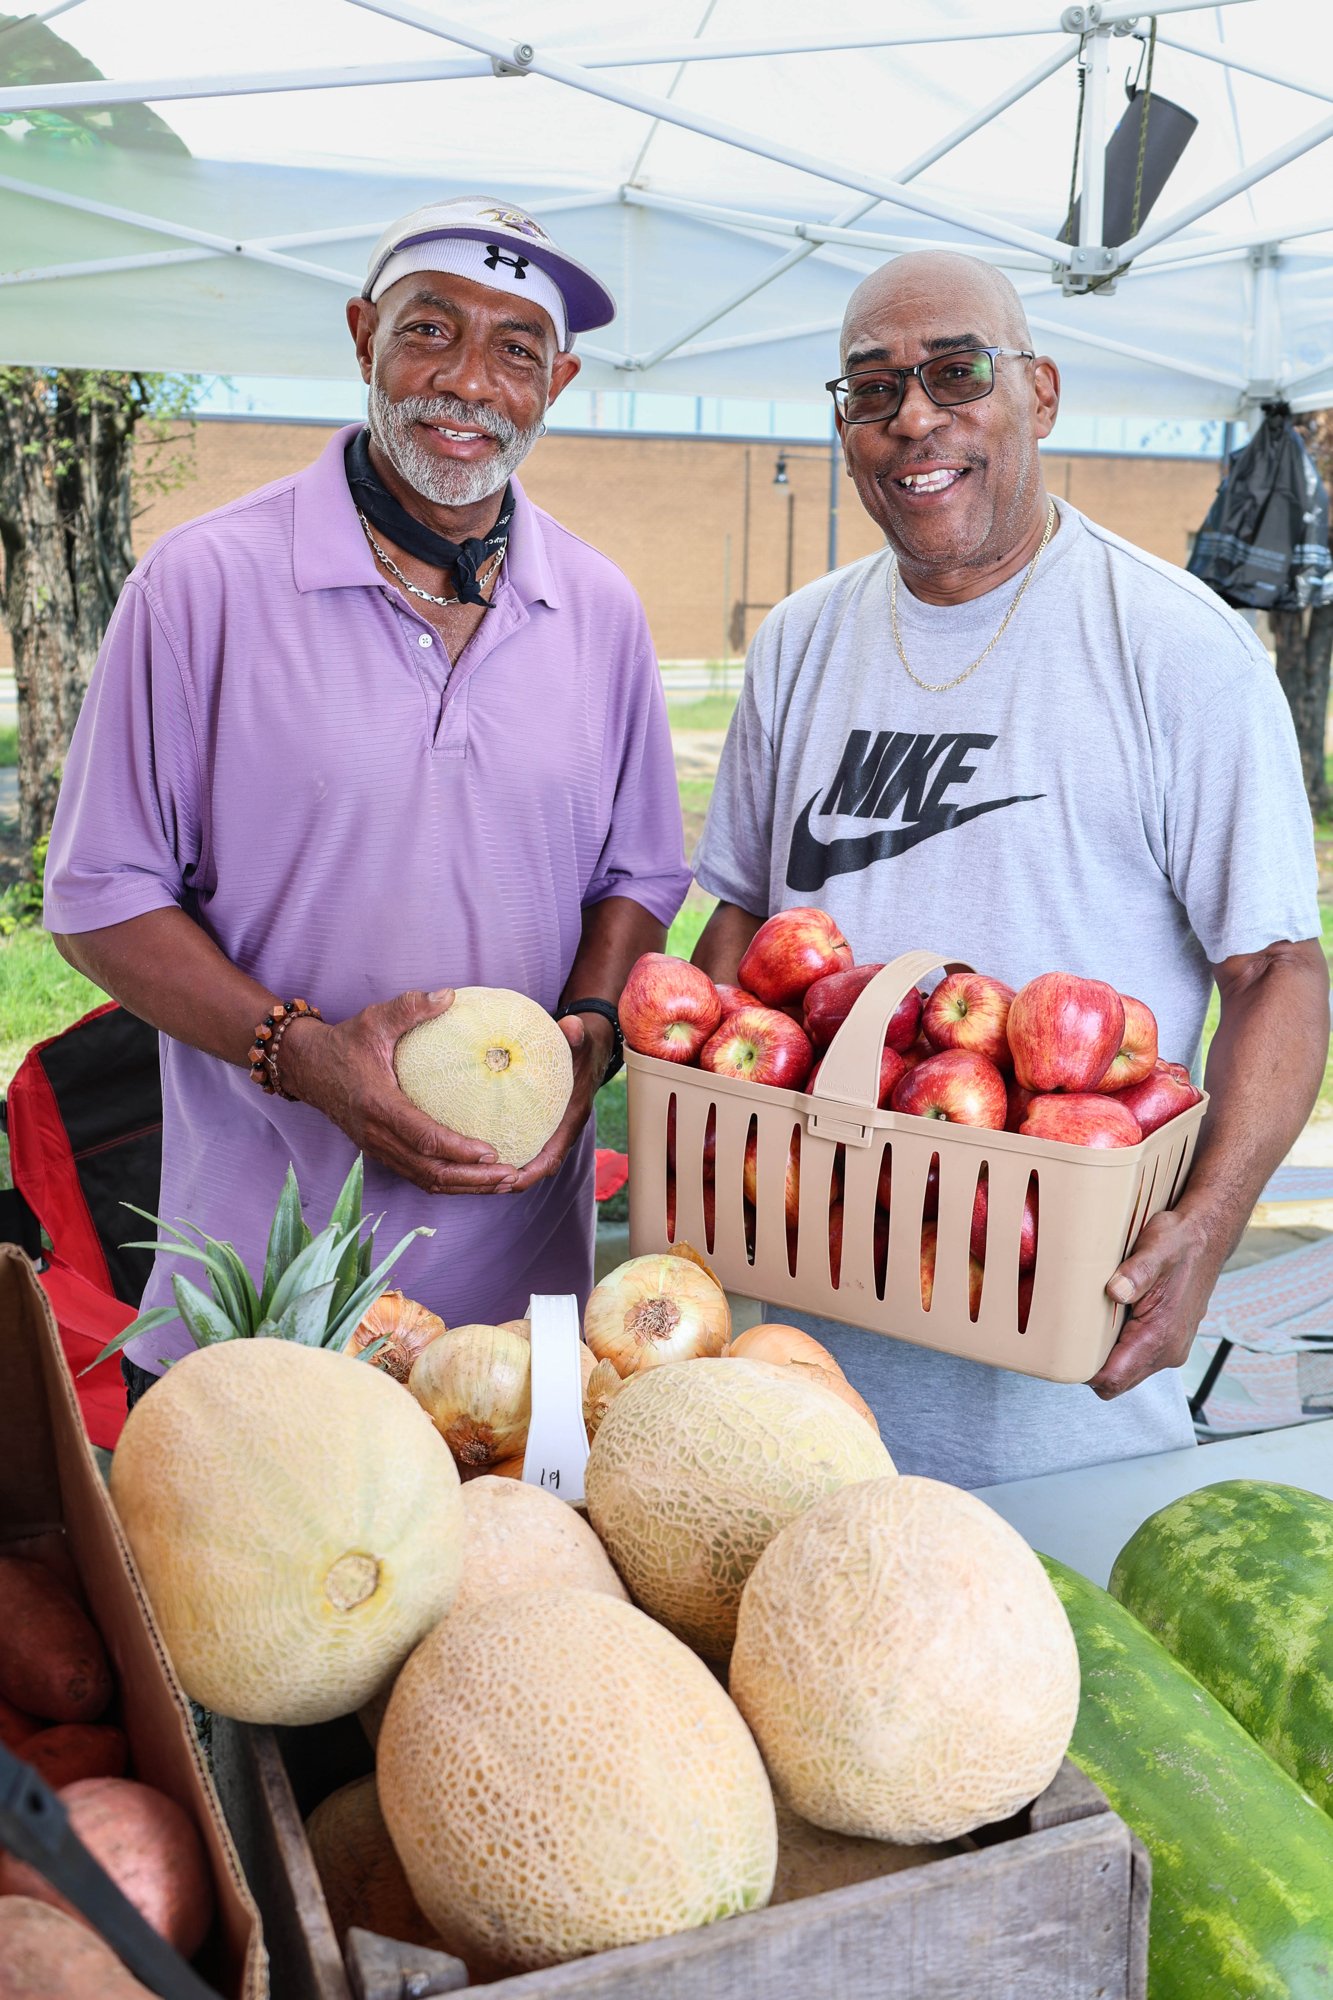 PHOTOS: Meet the Vendors of the Barry Farm Outdoor Market